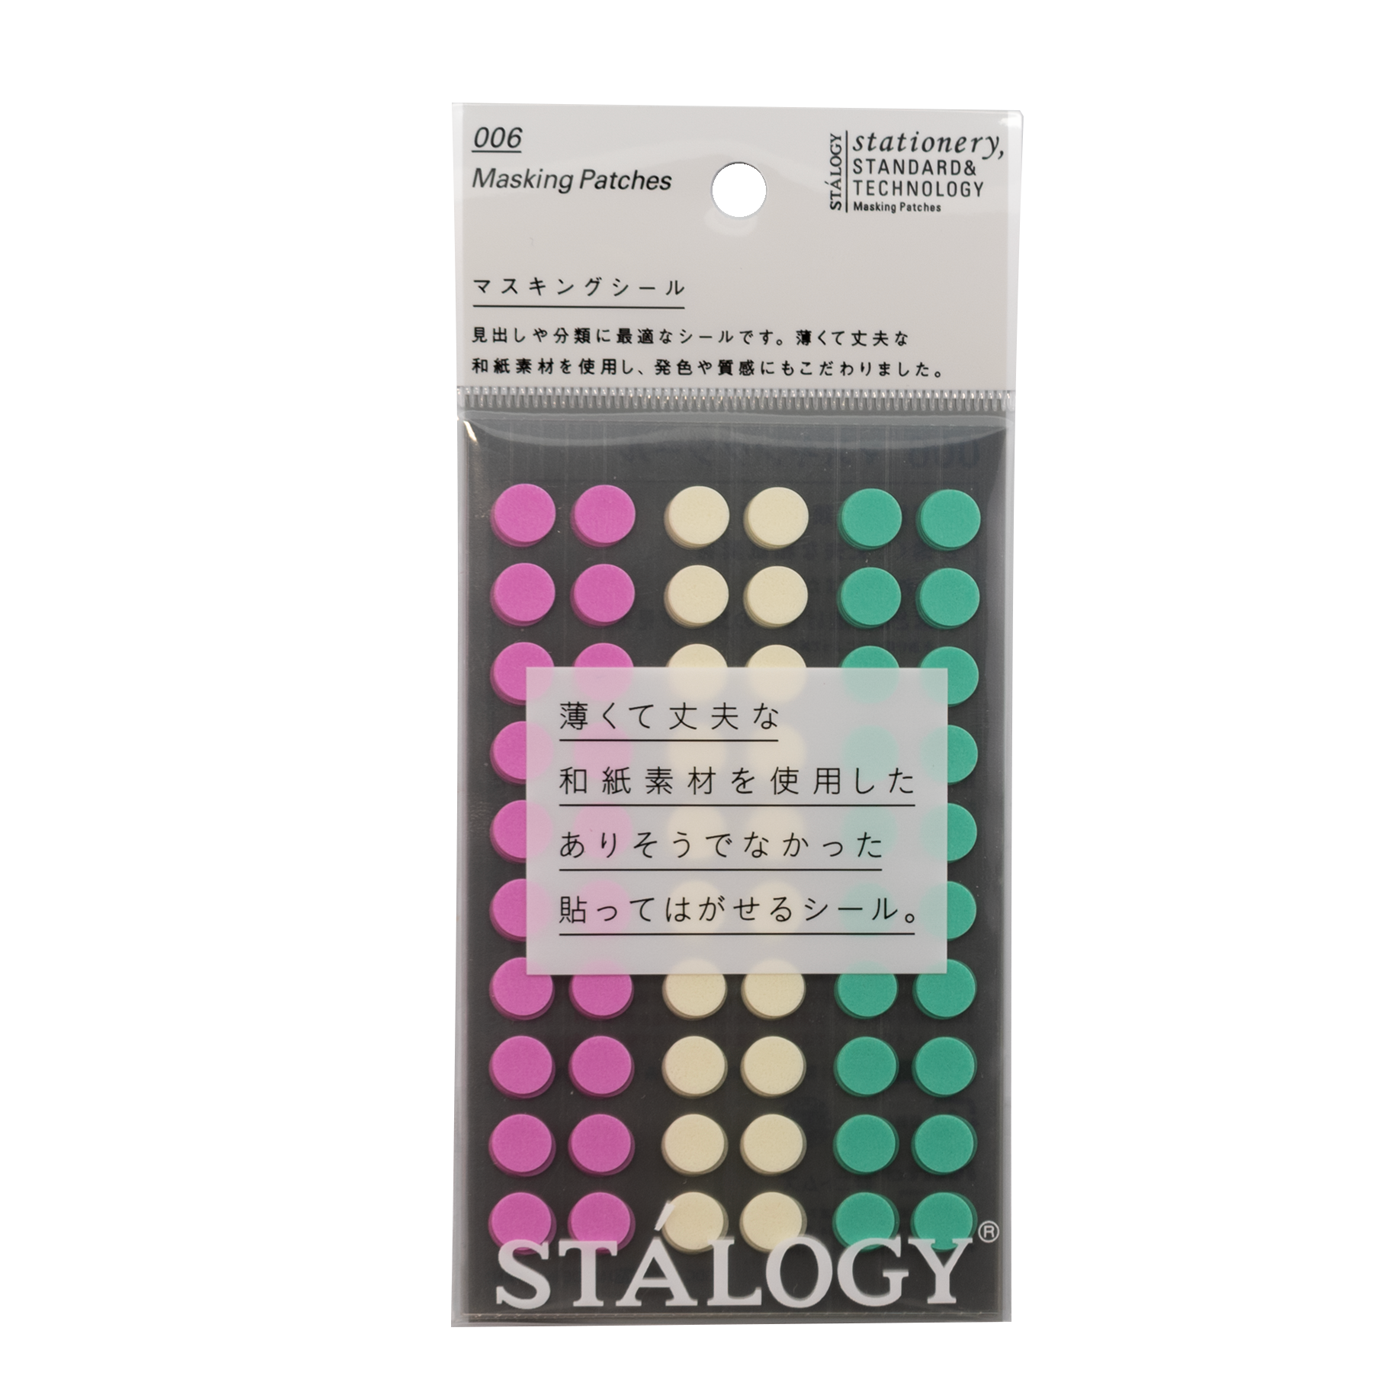 Stalogy 006 - Masking Patches - 8mm dots